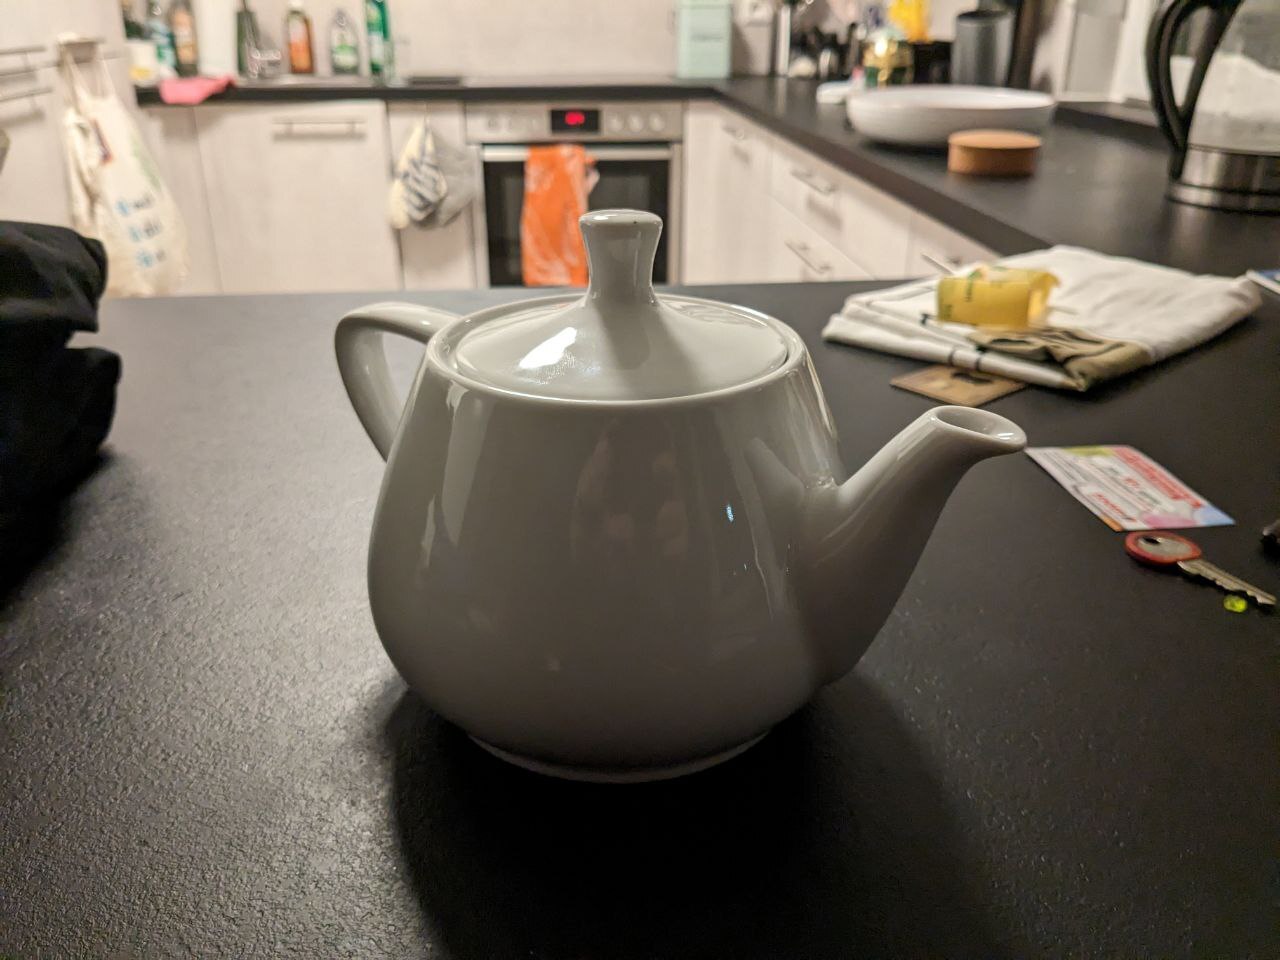 The Utah teapot on xqs kitchen counter